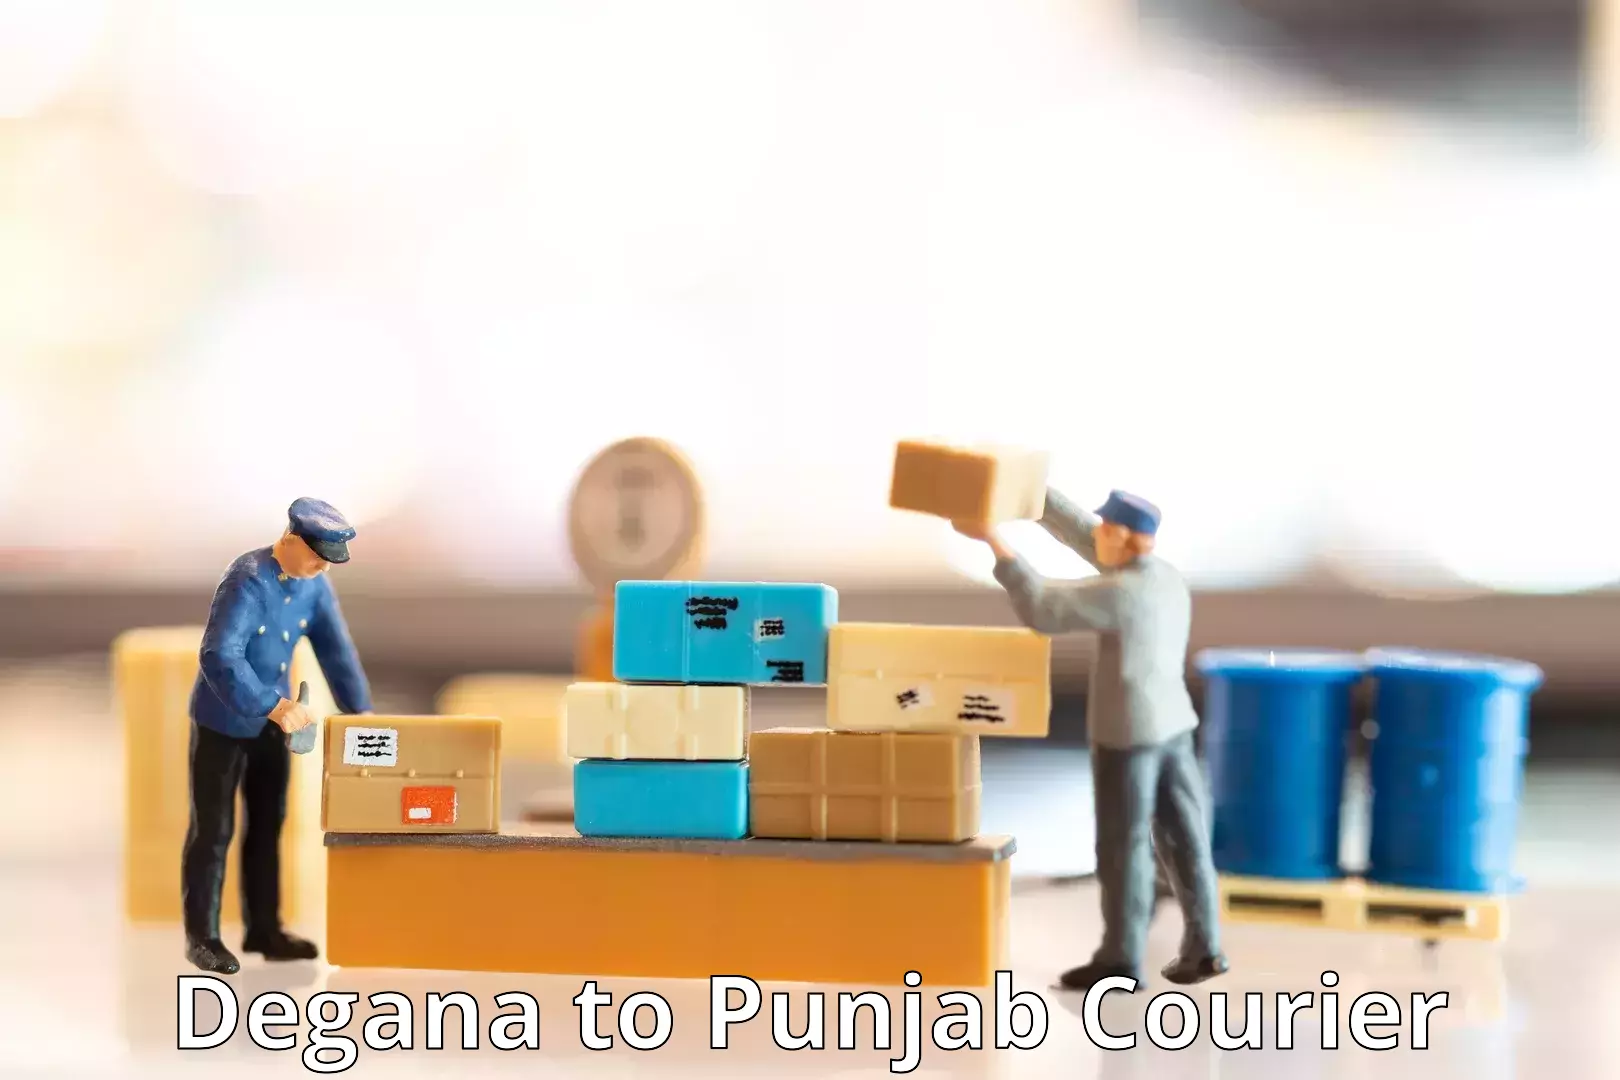 Pharmaceutical courier Degana to Punjab